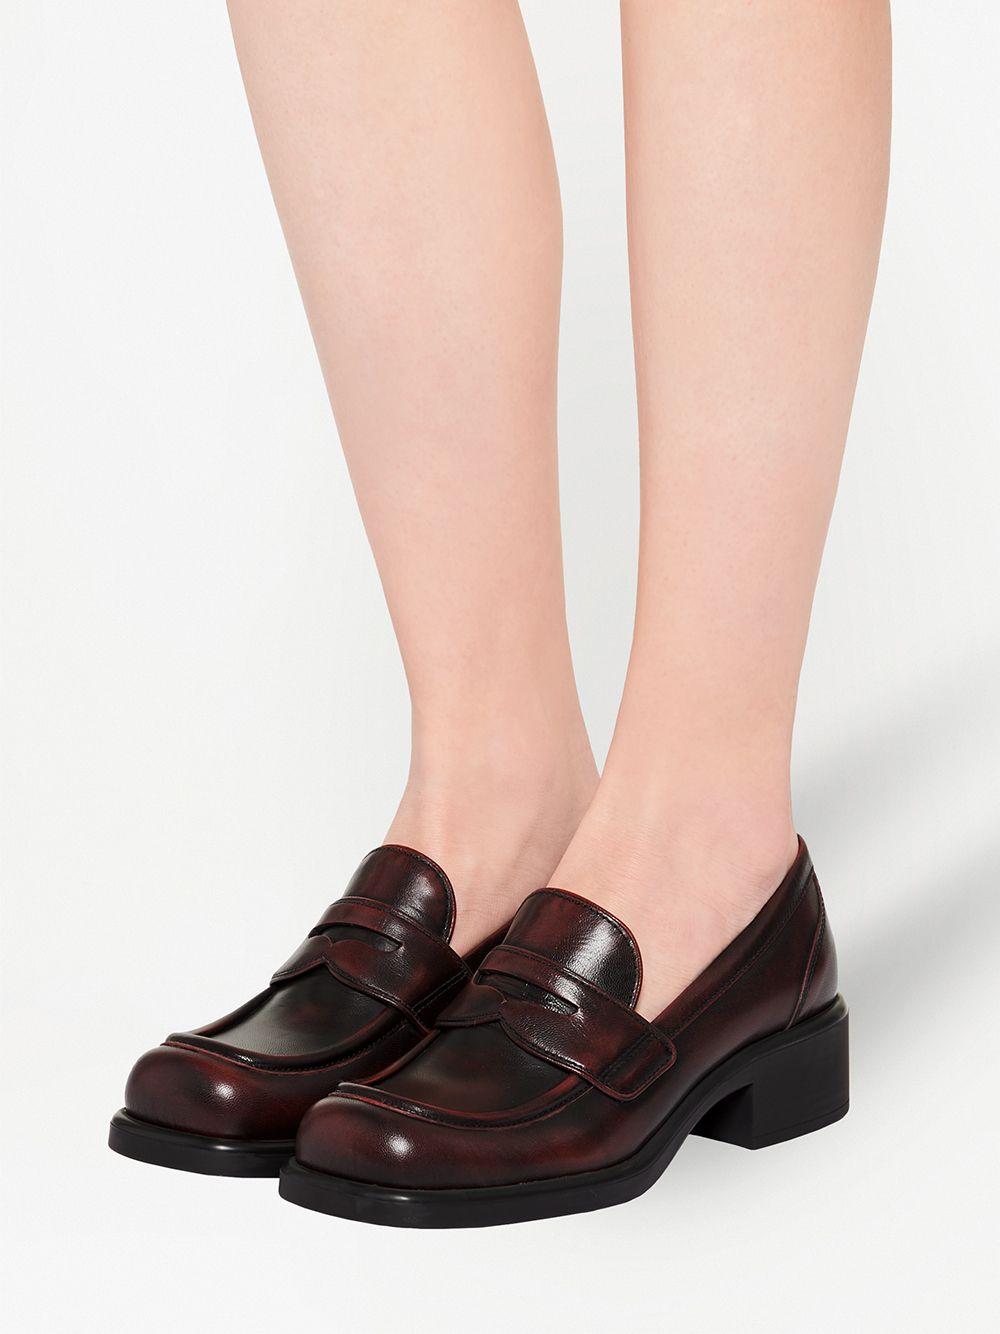 Miu Miu Square-toe Block Heel Loafers in Red | Lyst